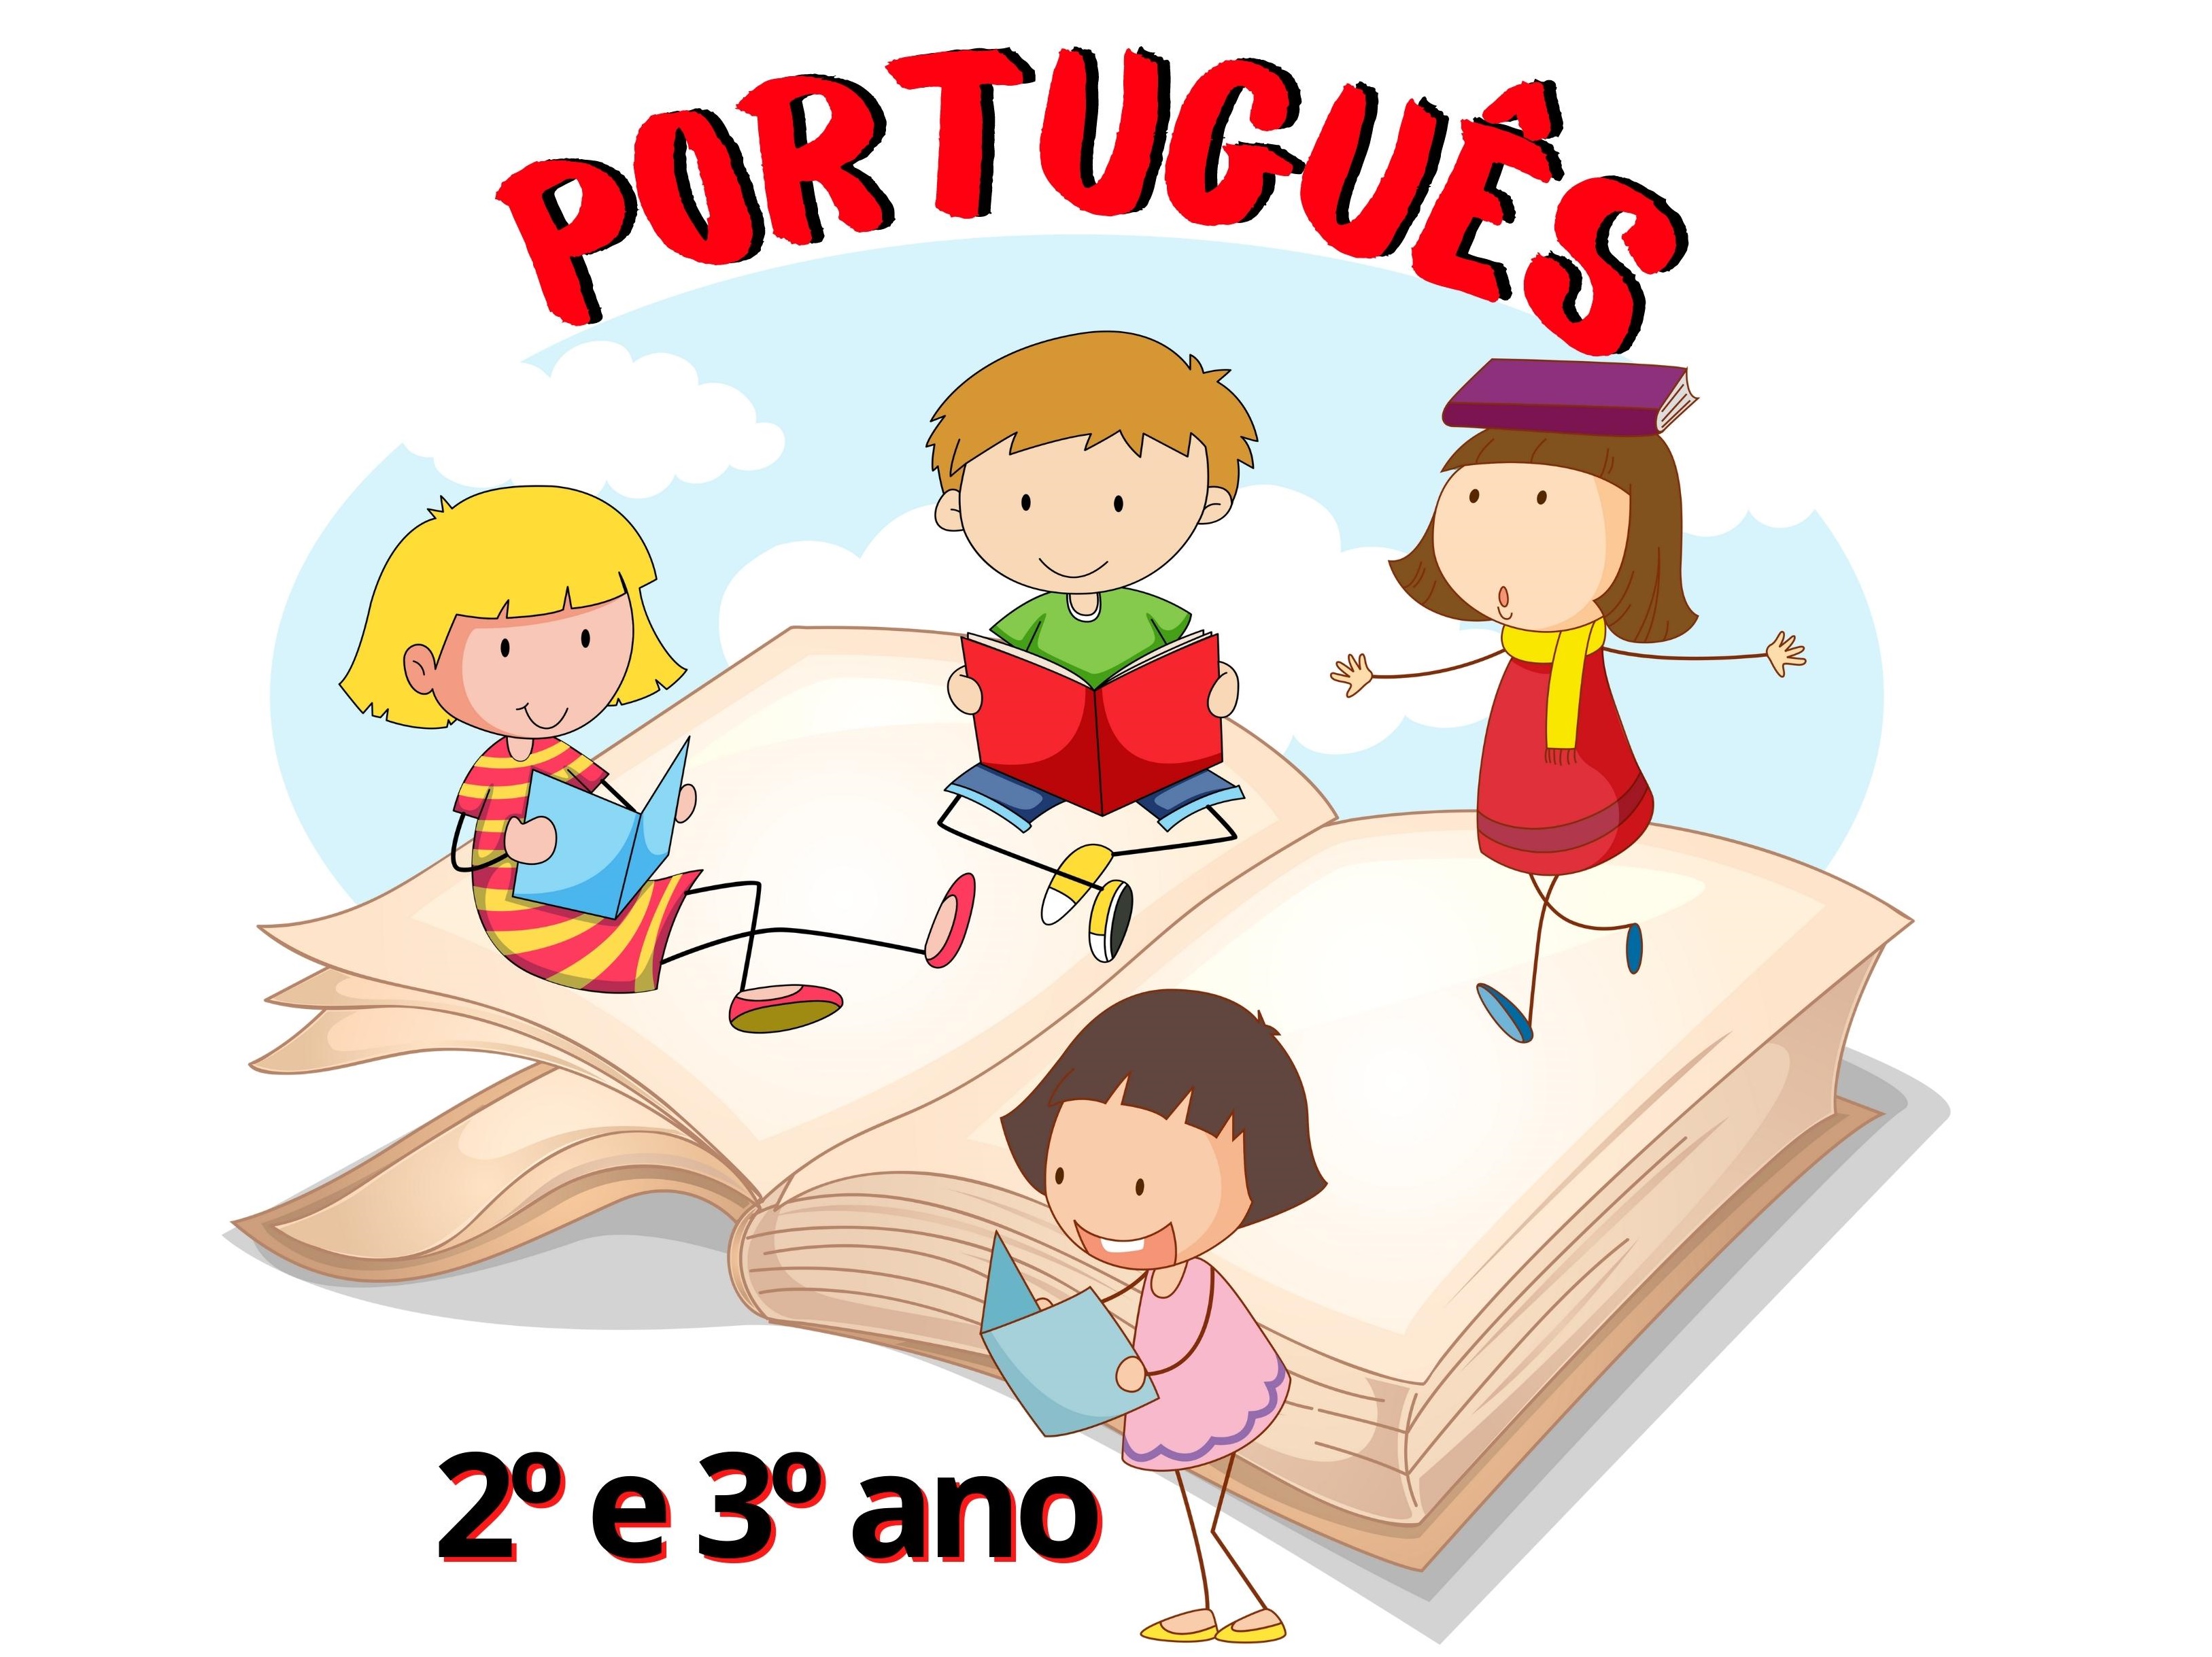 Língua Portuguesa, 3º Ano